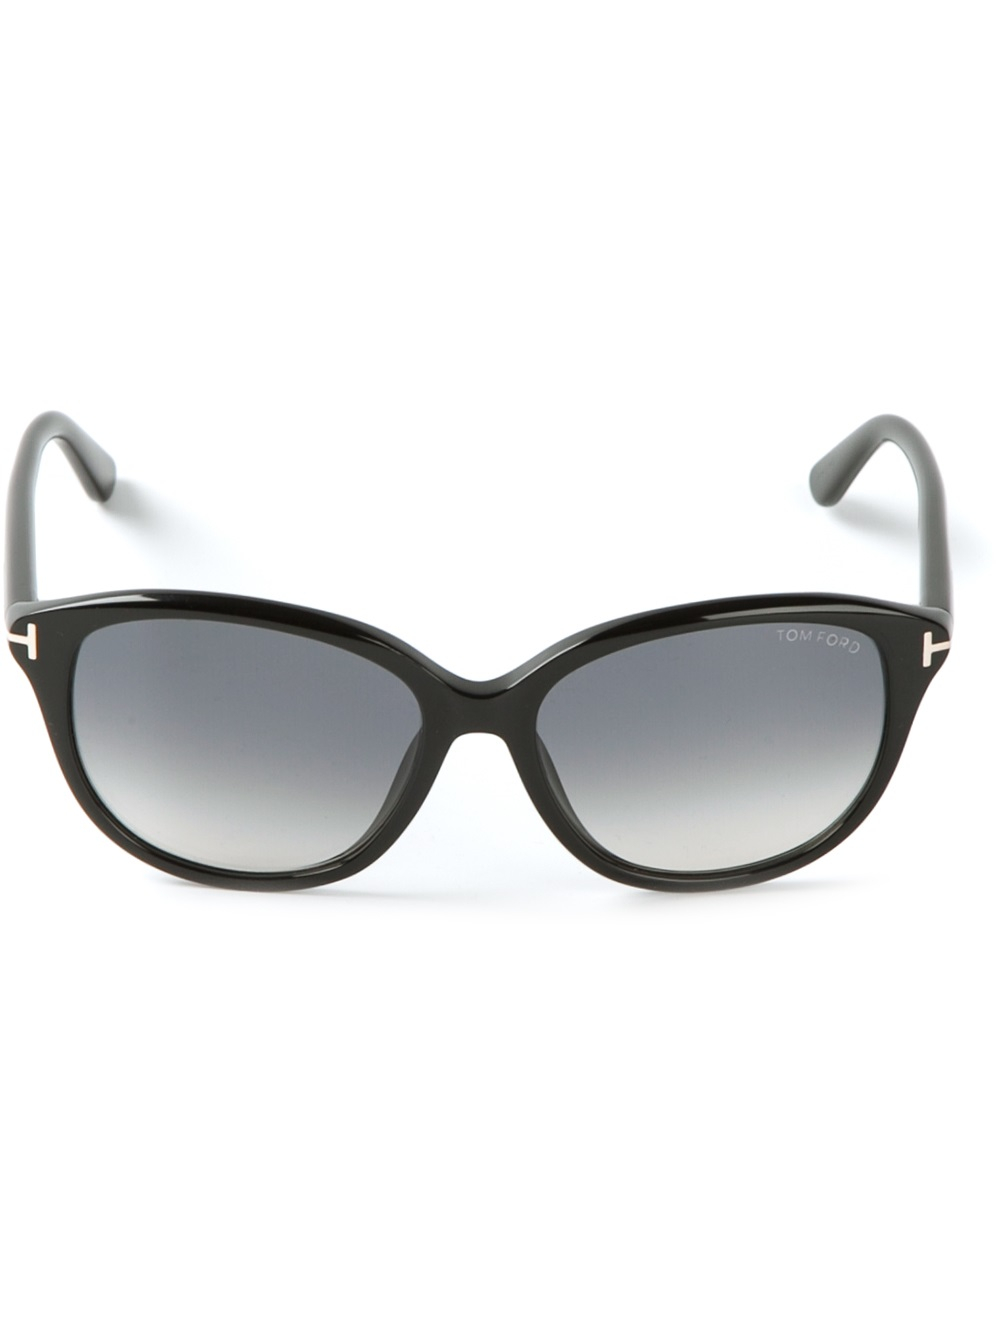 Tom ford black frame sunglasses #3